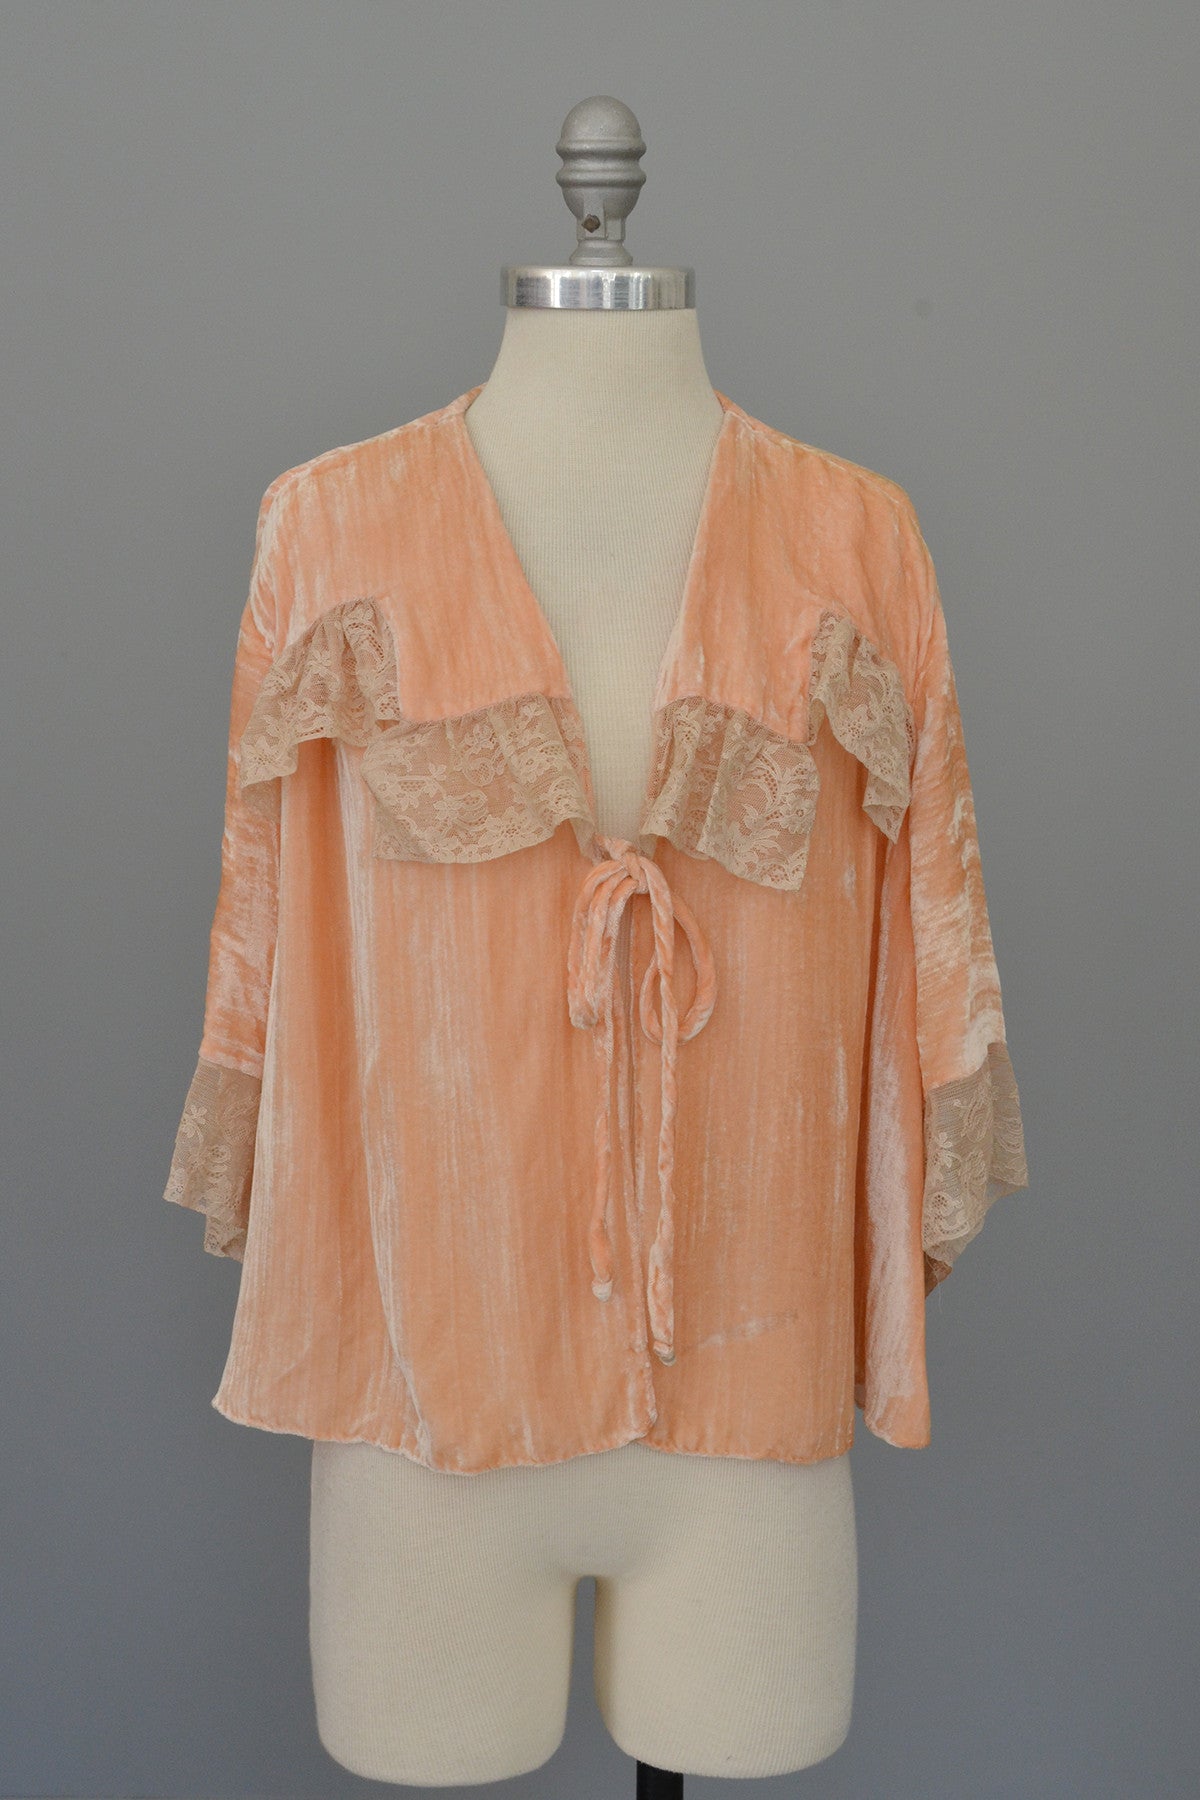 Vintage Peach Crushed Velvet Lace Bed Jacket Shrug Bell Sleeves